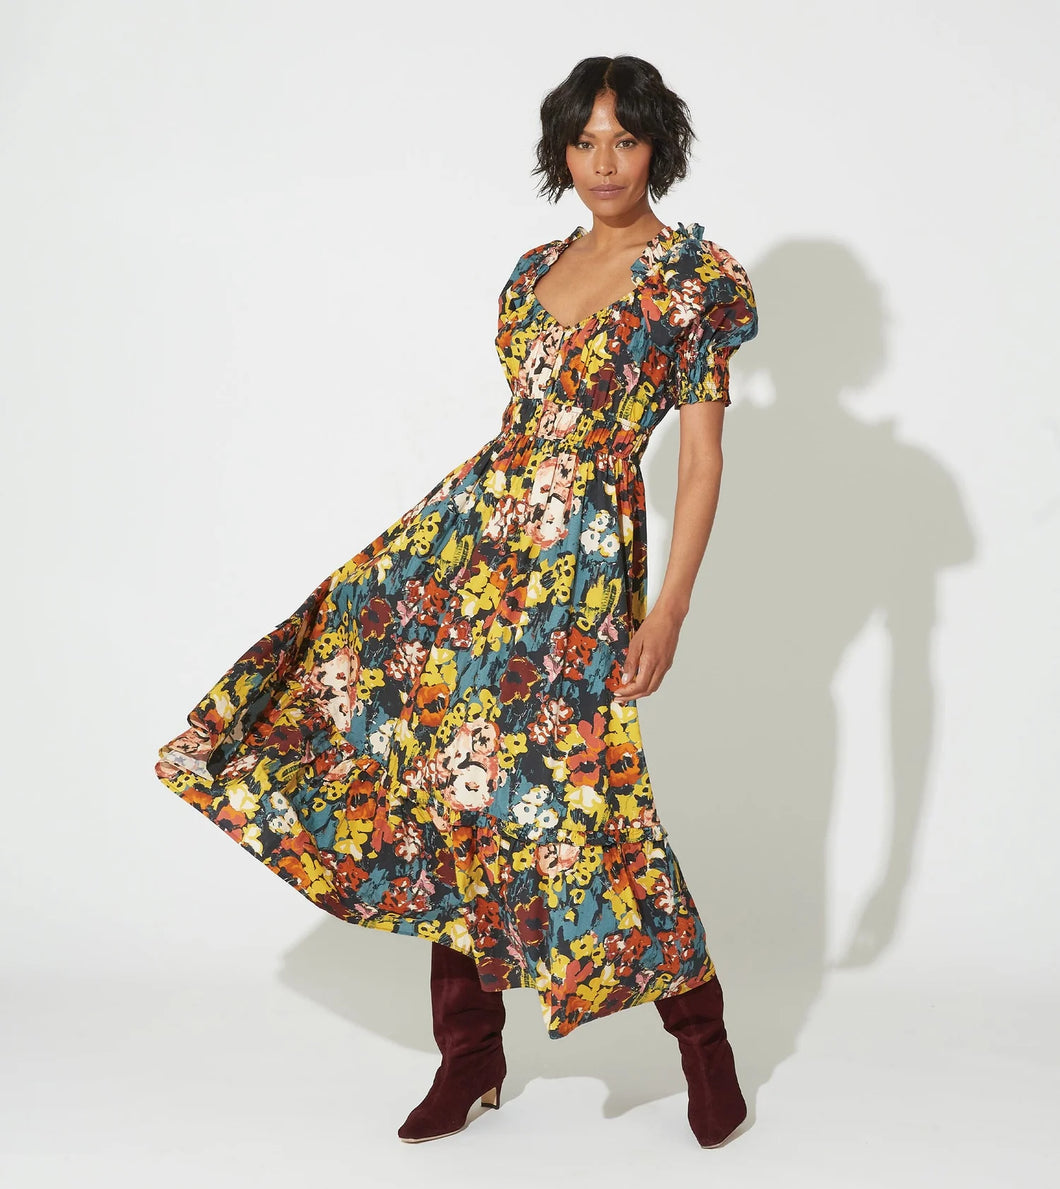 Caprice Ankle Dress - Monet